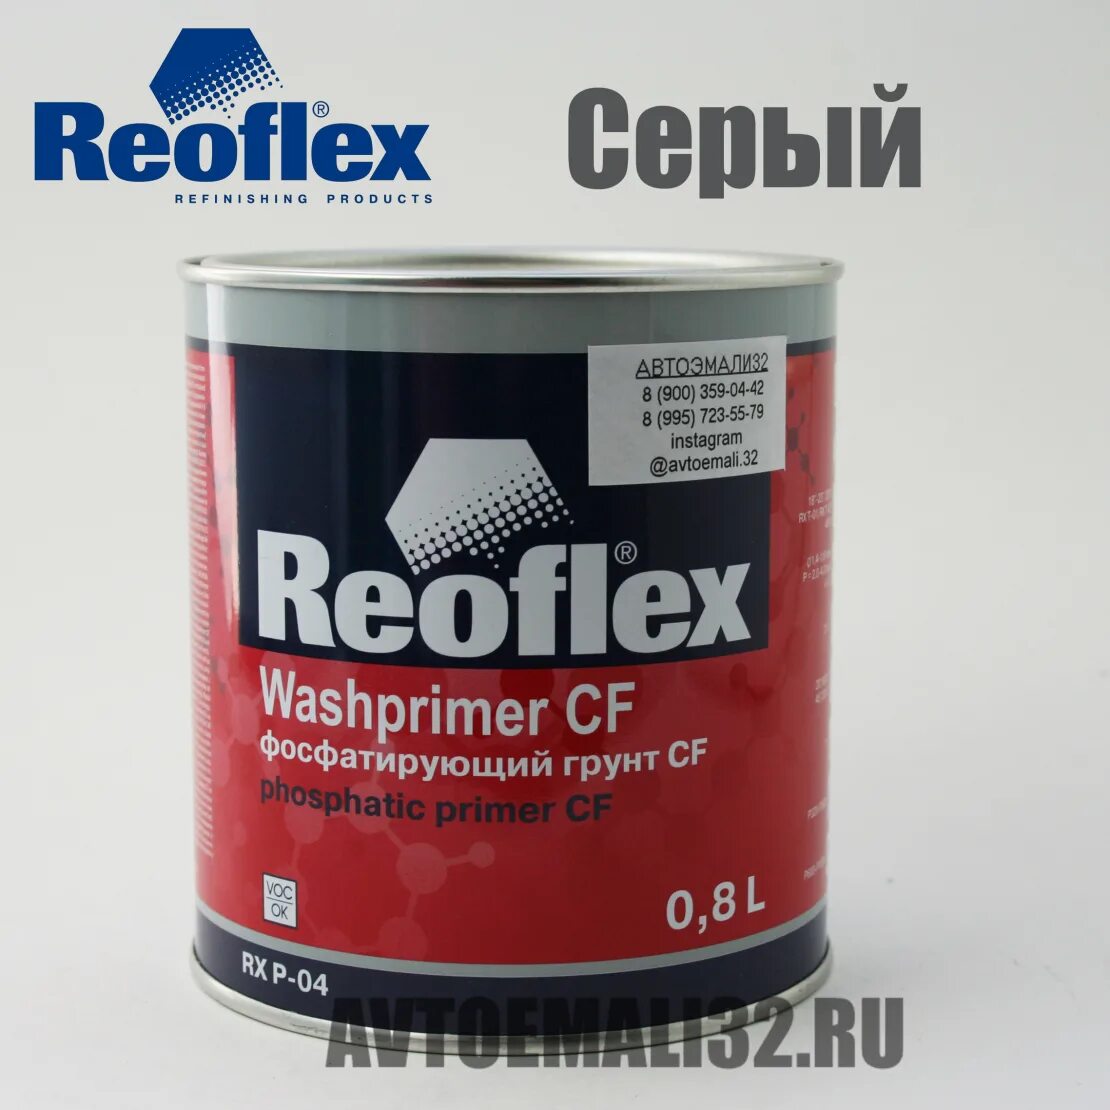 Реофлекс фосфатирующий грунт CF 1+1. Reoflex грунт фосфатирующий 1к (серый) 0,8л.. Грунт фосфатирующий Reoflex. Реофлекс грунт 1к.